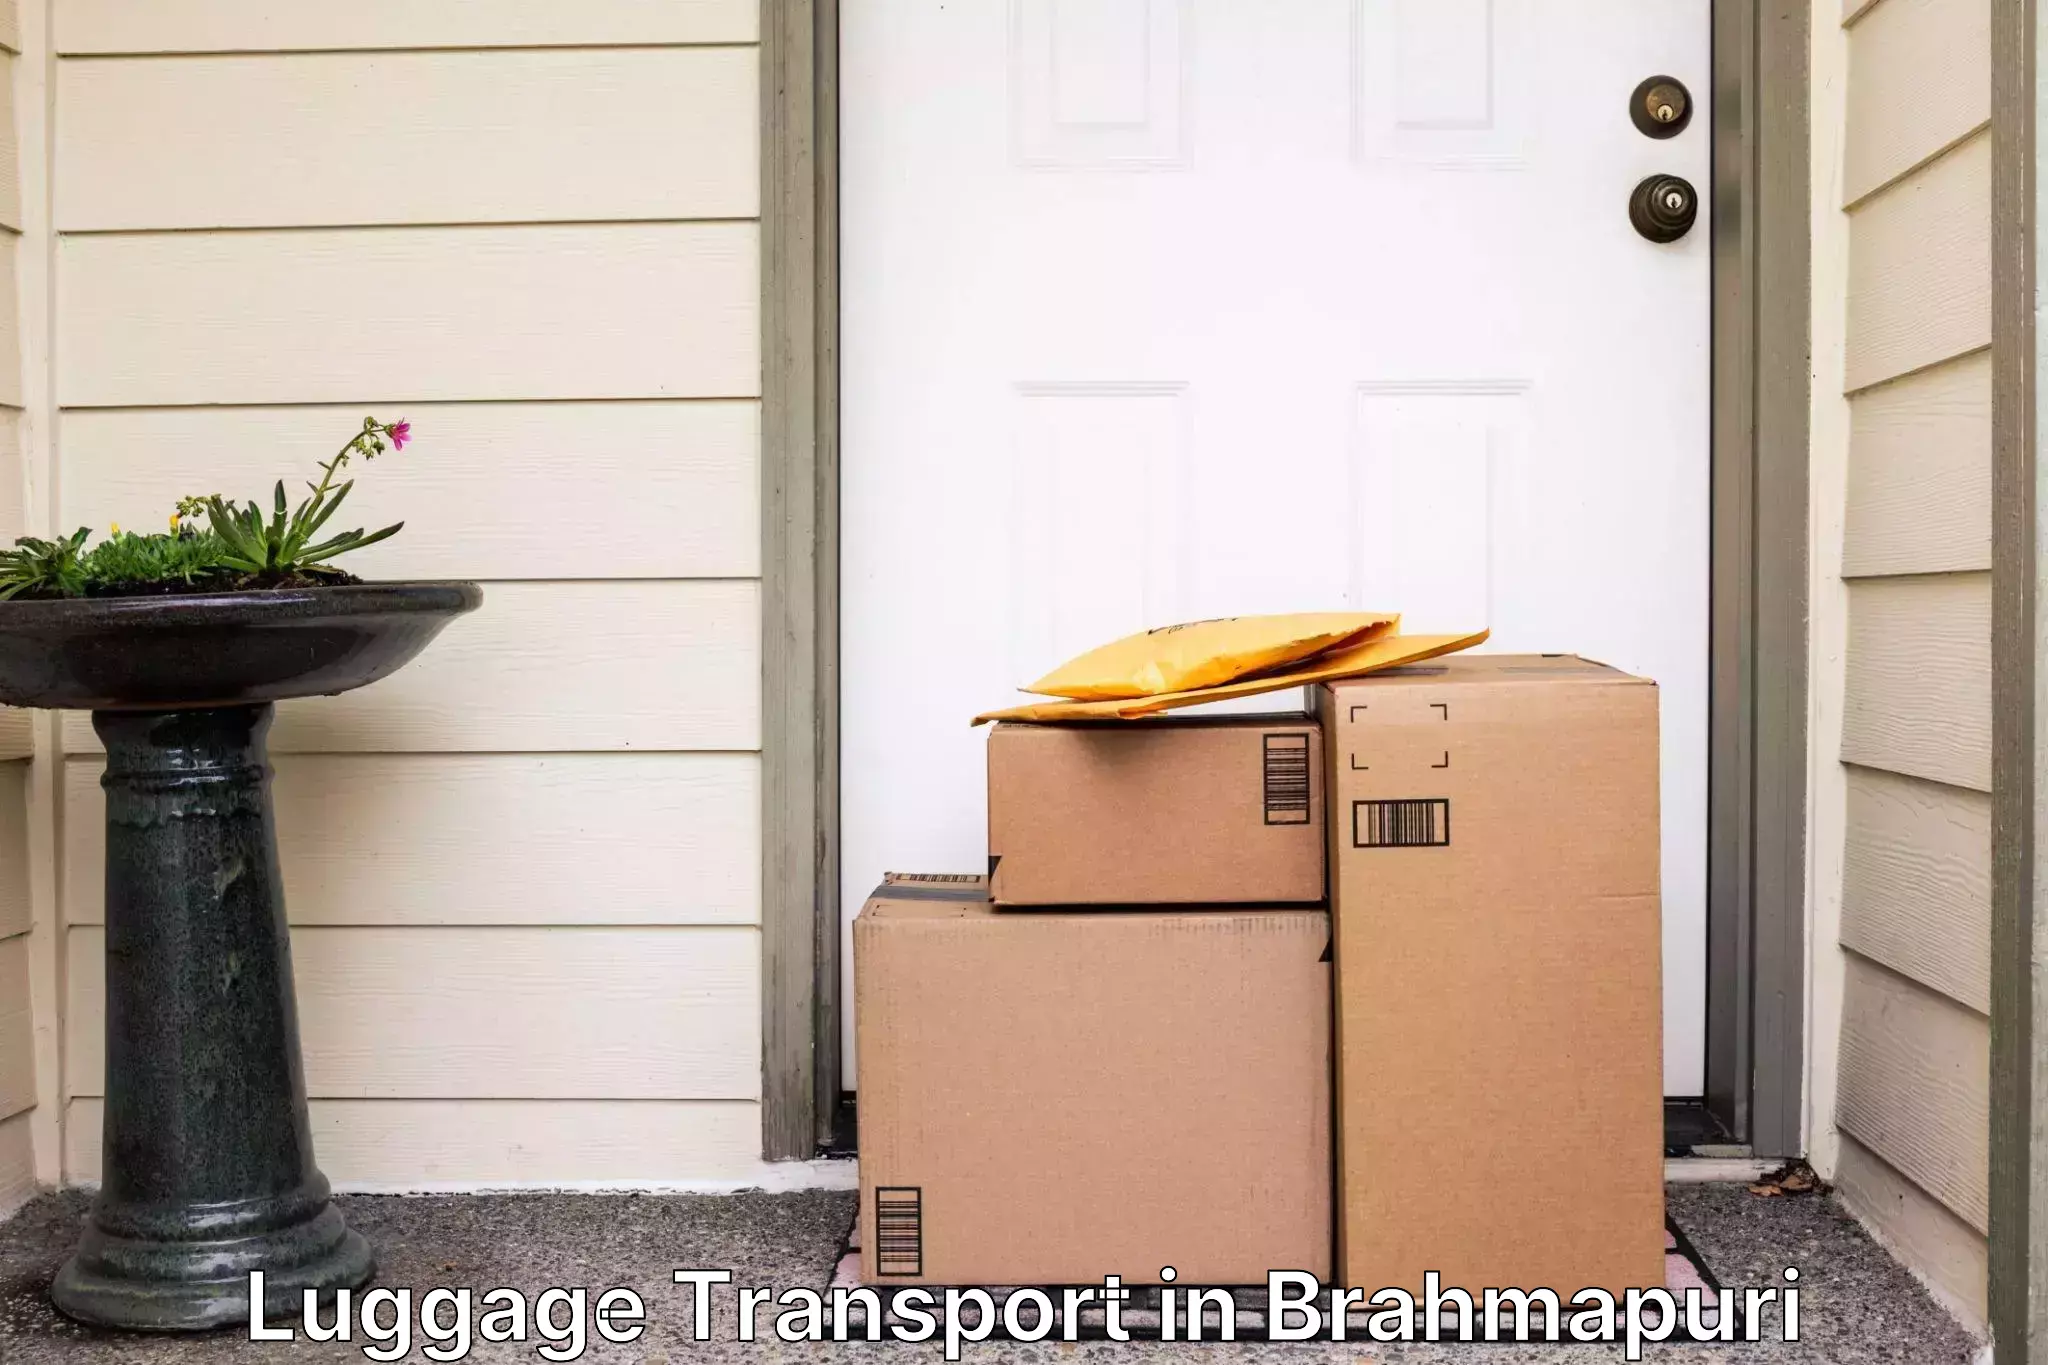 Luggage transport consultancy in Brahmapuri